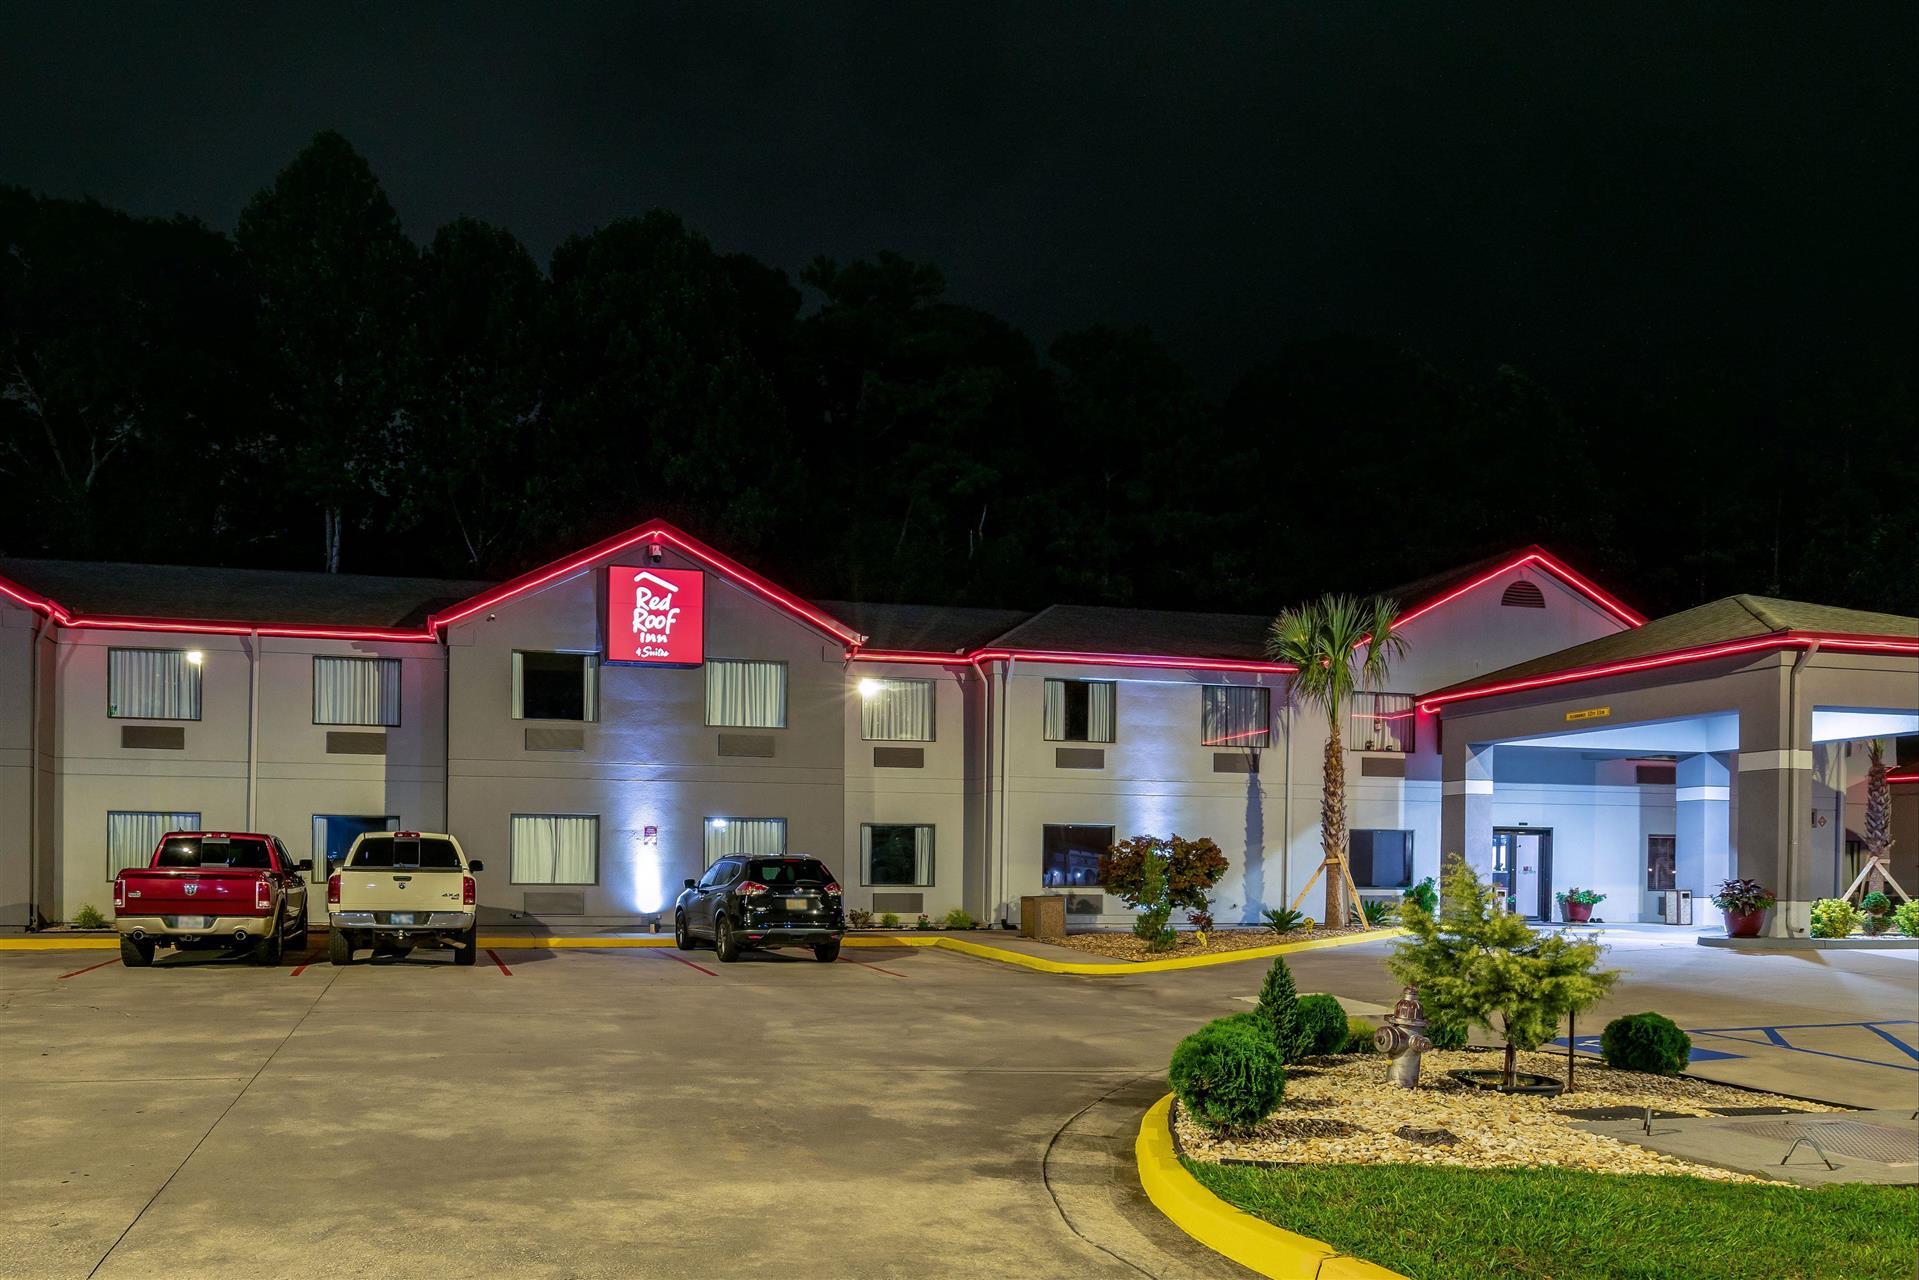 Red Roof Inn & Suites Carrollton, GA - West Georgia in Carrollton, GA